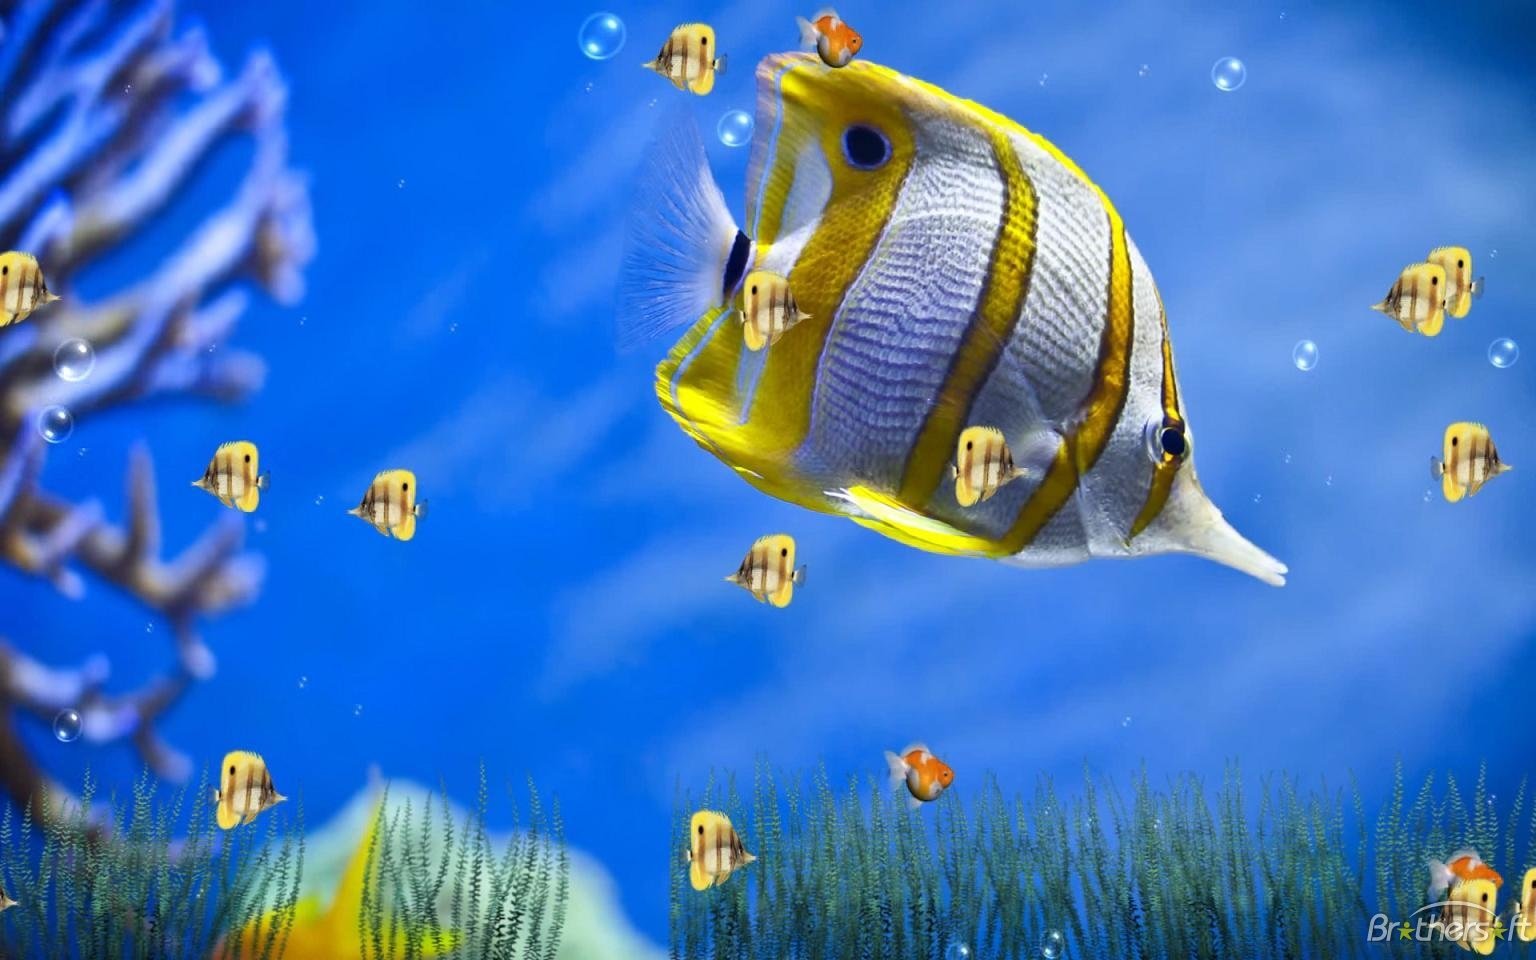  Animated Wallpaper Marine Life Aquarium Animated Wallpaper 10